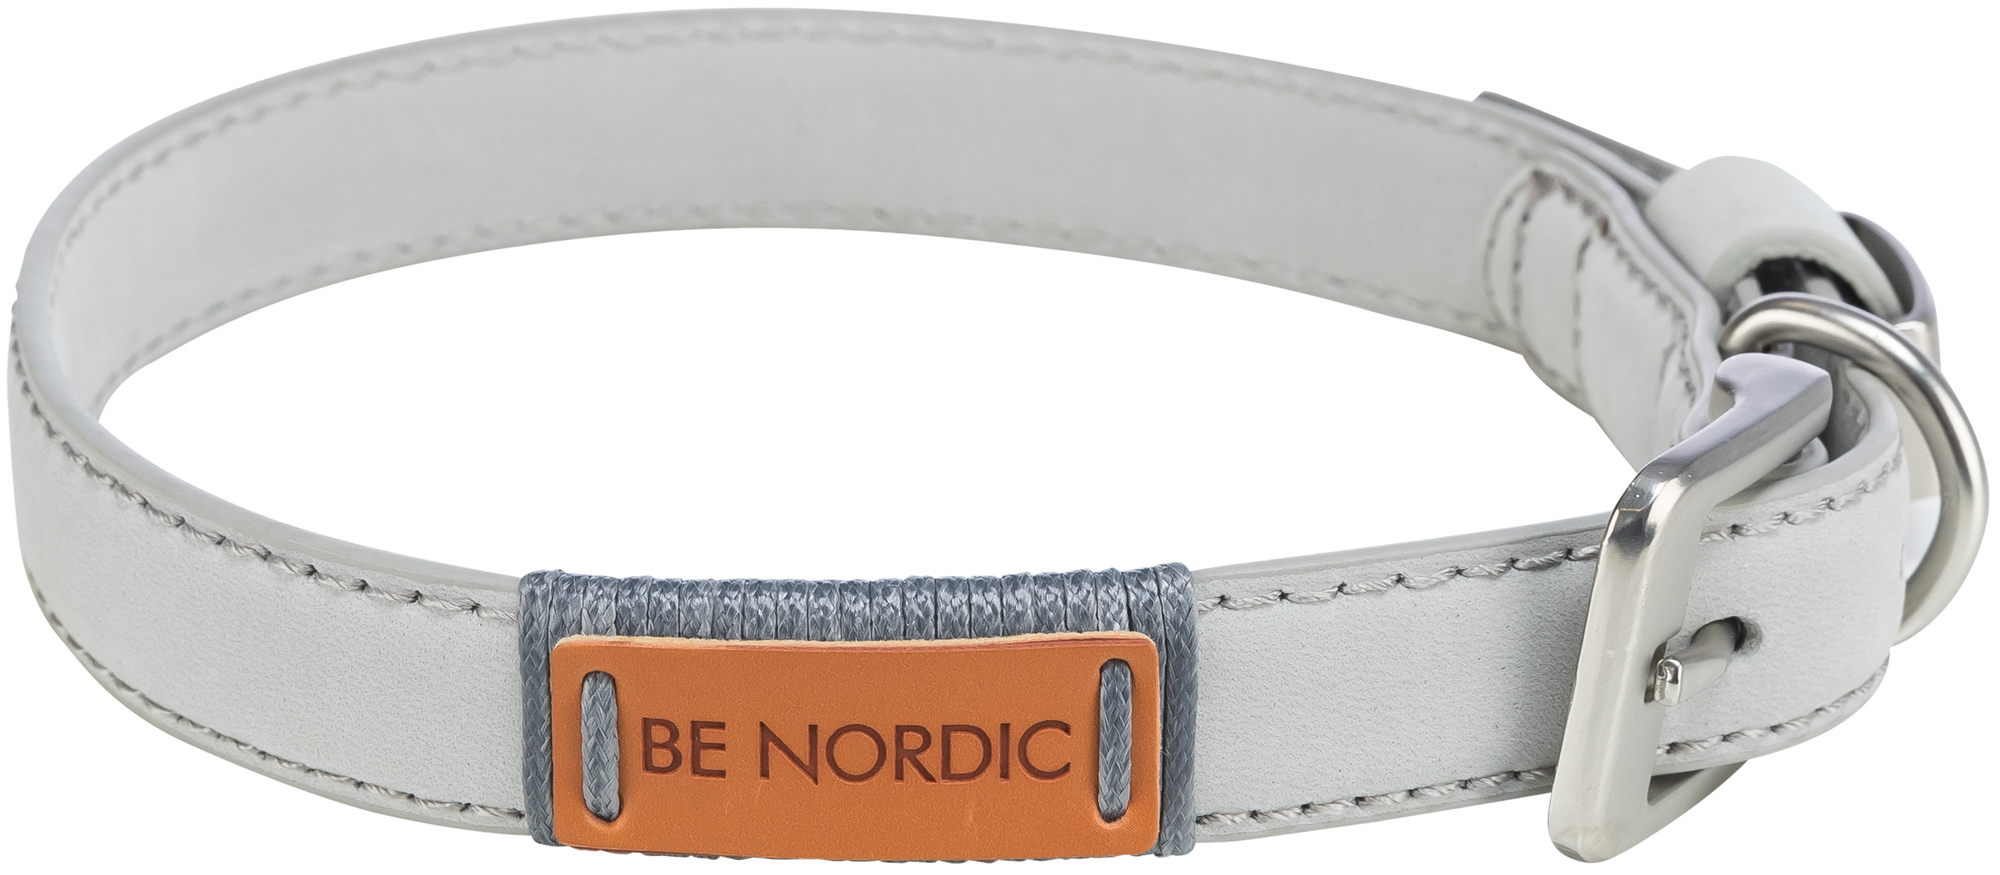 Trixie Be Nordic halsband, lichtgrijs, leer